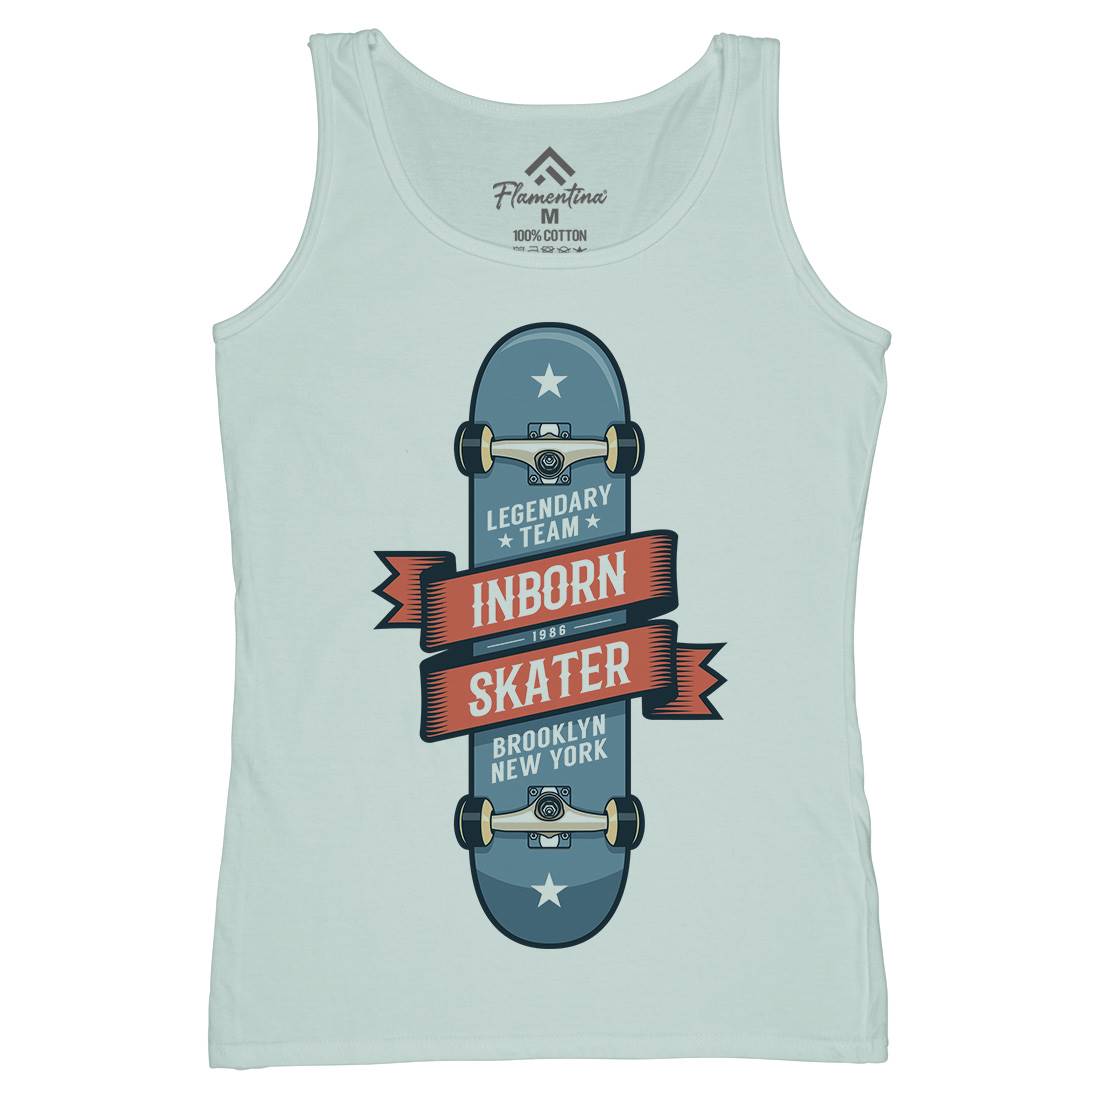 Inborn Skater Womens Organic Tank Top Vest Skate D895